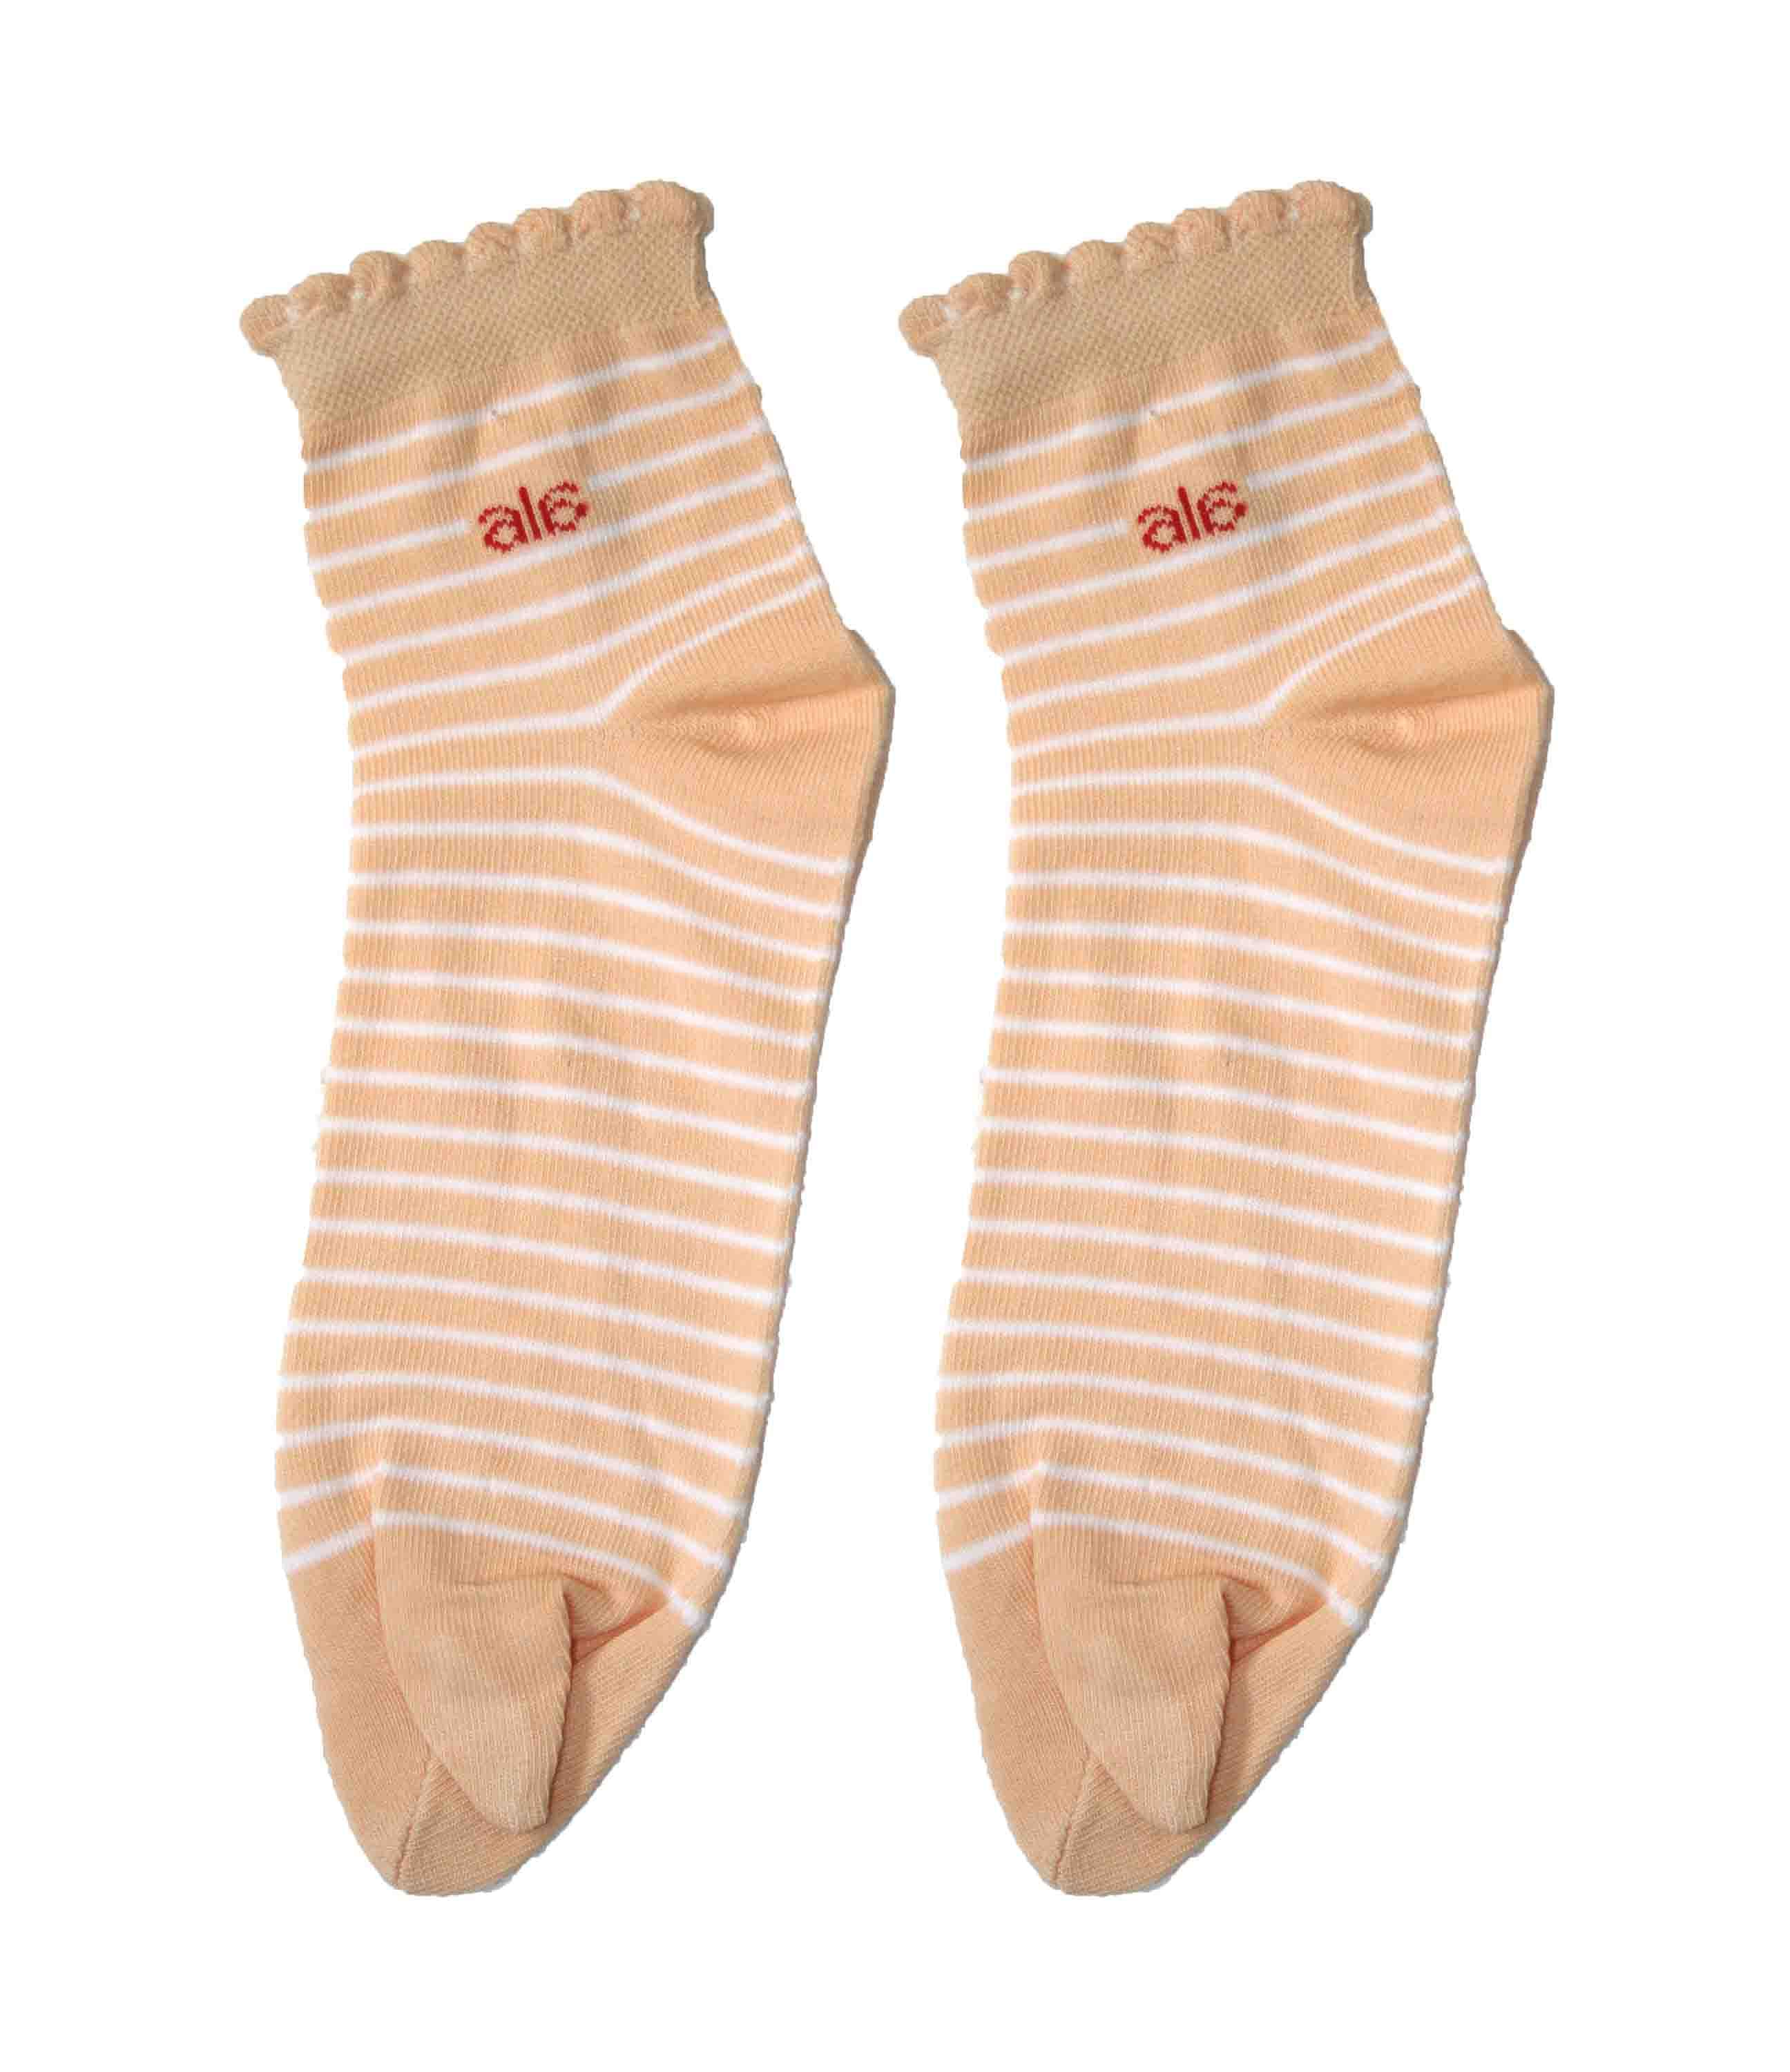 Ellie Wmn ankle Socks - Design-BG-Wmn-DESIGN-003-SKN